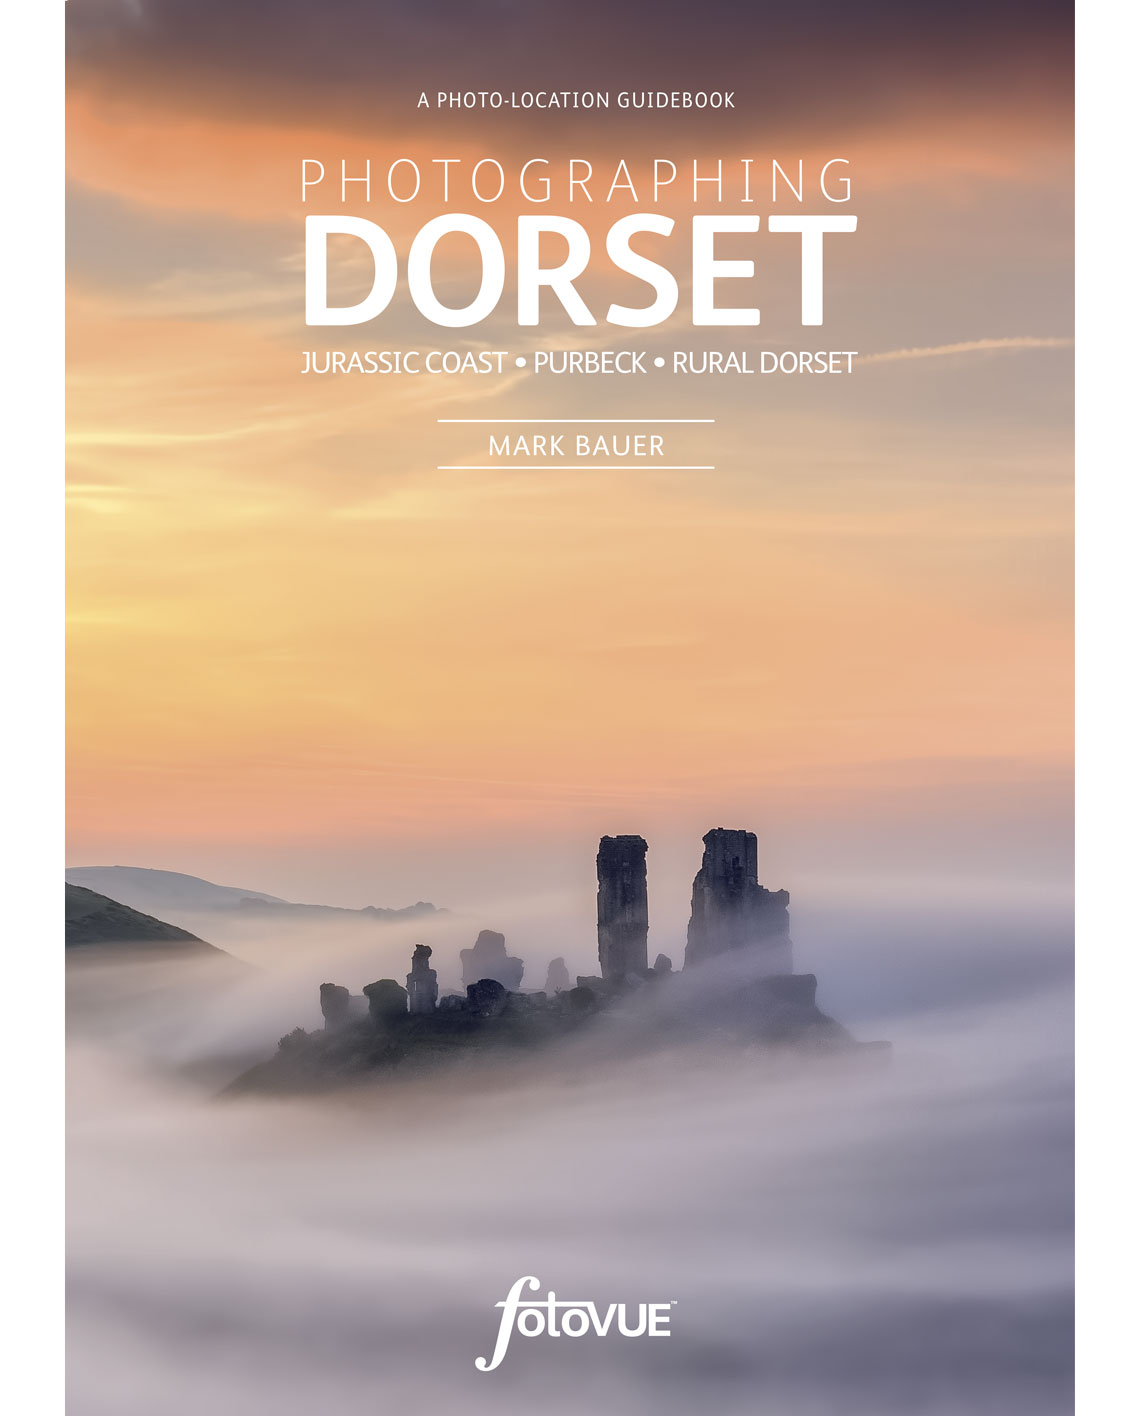 Online bestellen: Reisfotografiegids Photographing Dorset: The Most Beautiful Places to Visit | Fotovue